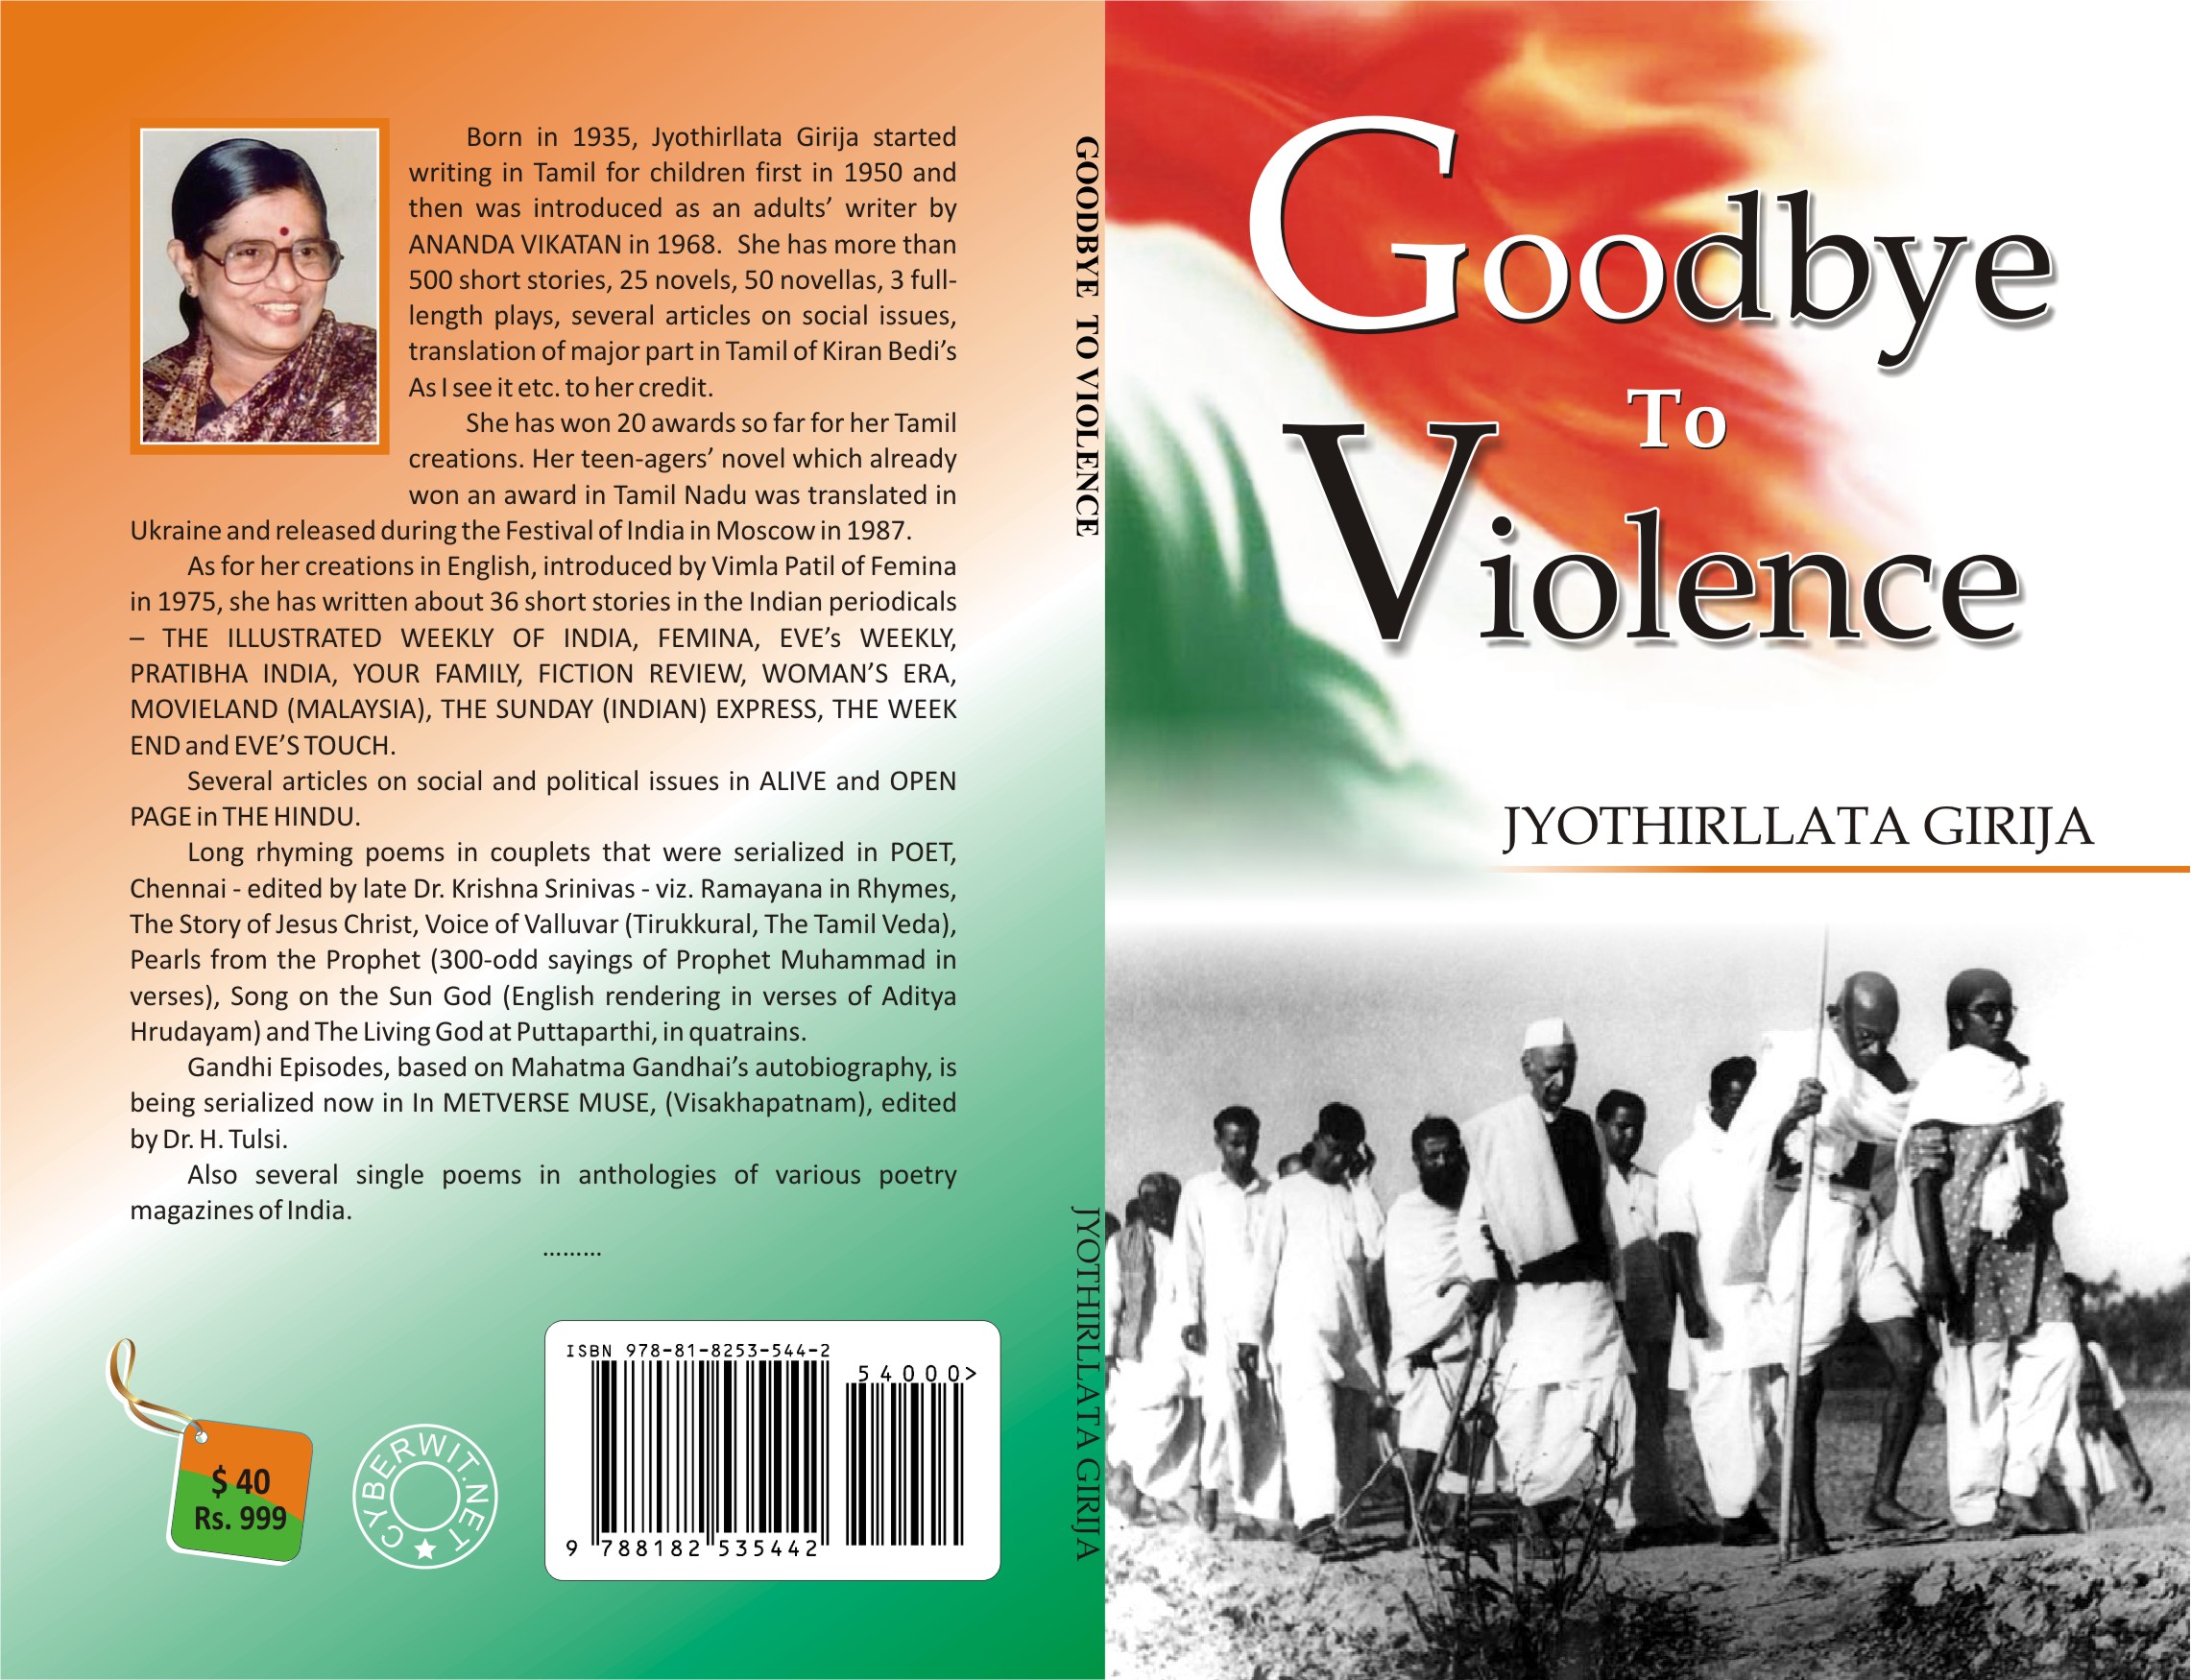 Goodbye to Violence – A transcreation of Jyothirllata Girija novel Manikkodi – Published